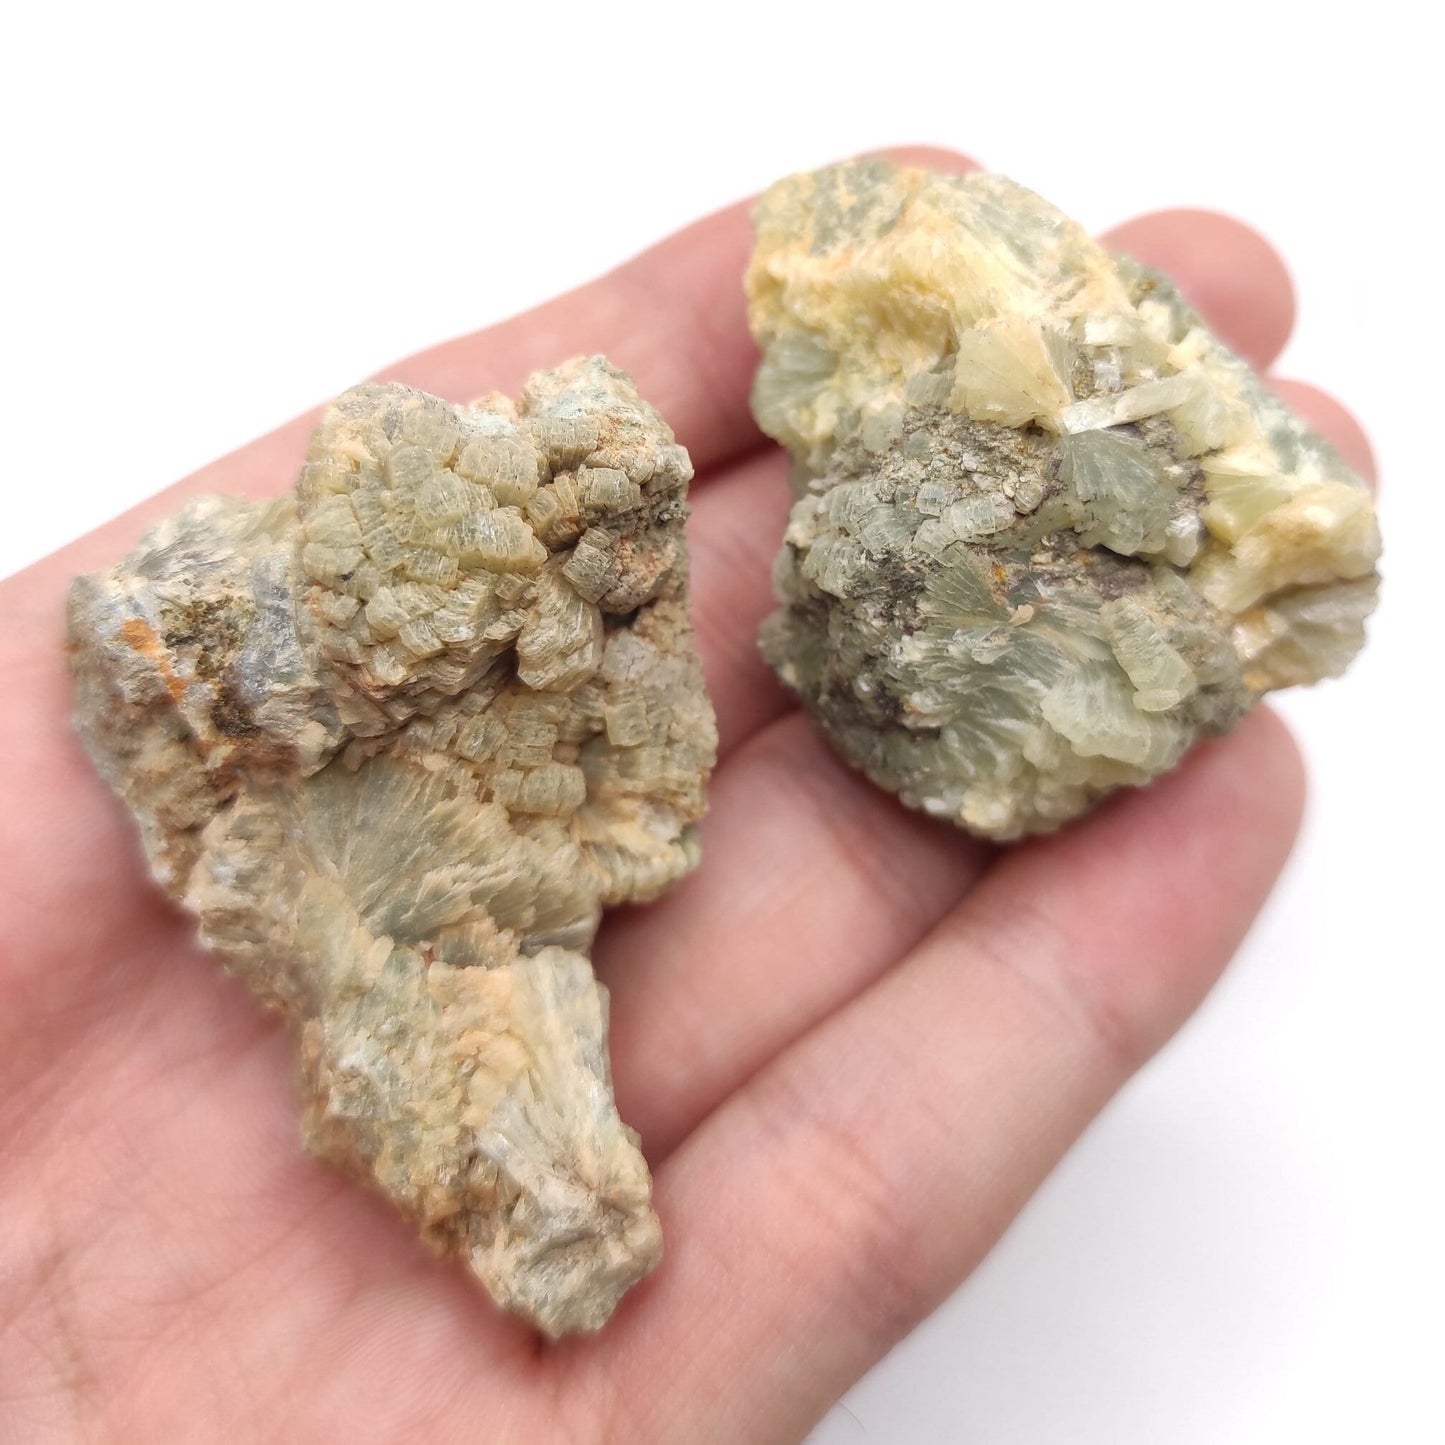 97g (2pcs) Prehnite Lot - Raw Prehnite Crystals from Midelt Province, Morocco - Natural Prehnite Minerals - Rough Prehnite Stone Set